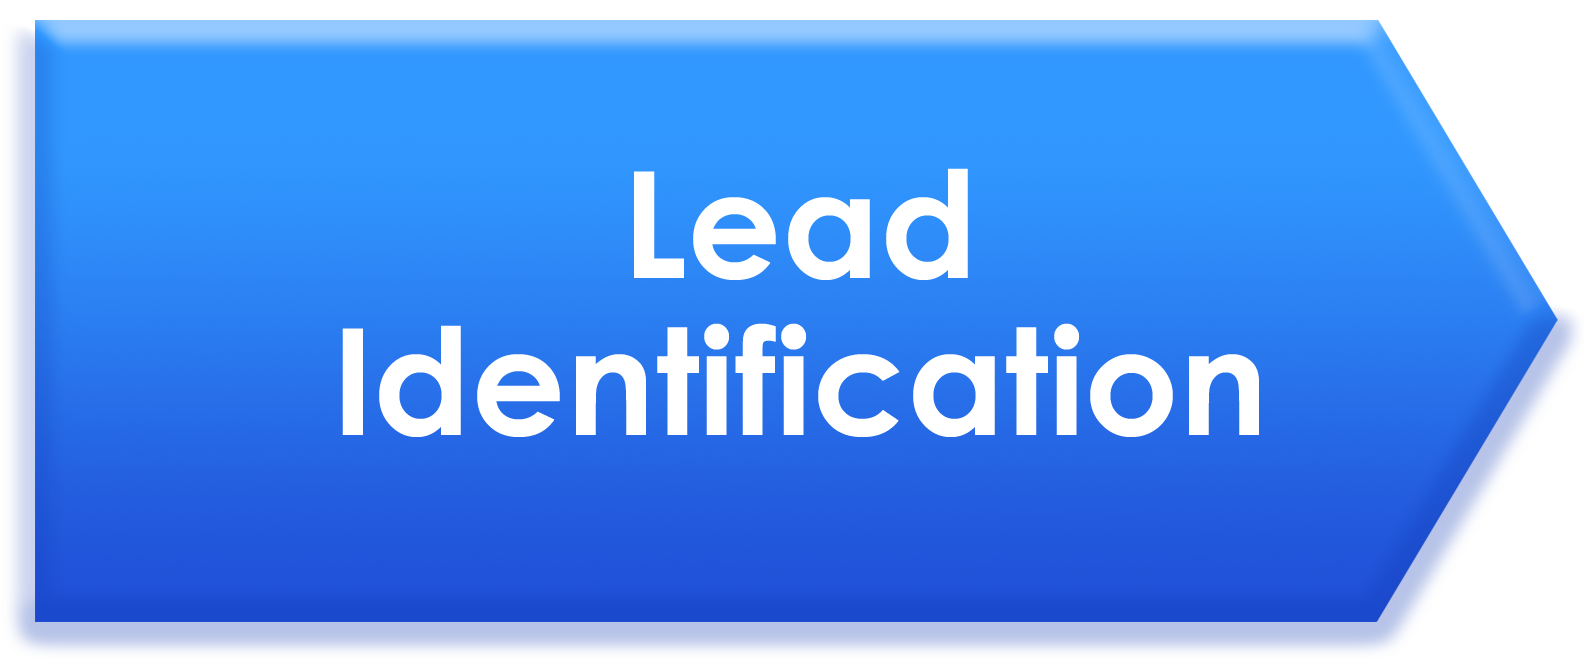 Lead Identification